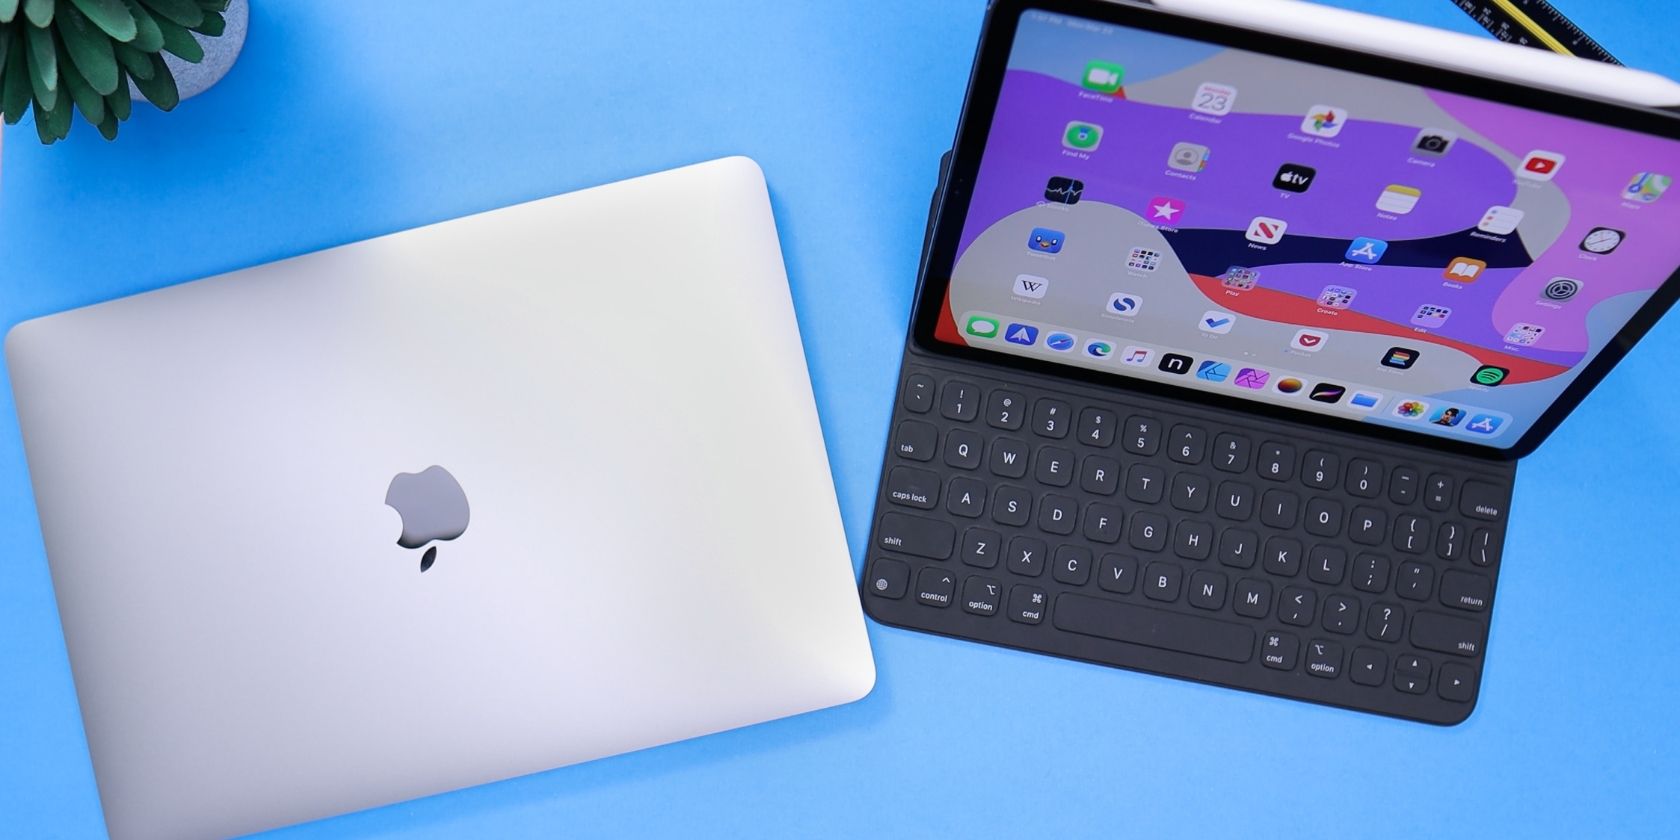 MacBook Alongside an iPad on a Desk